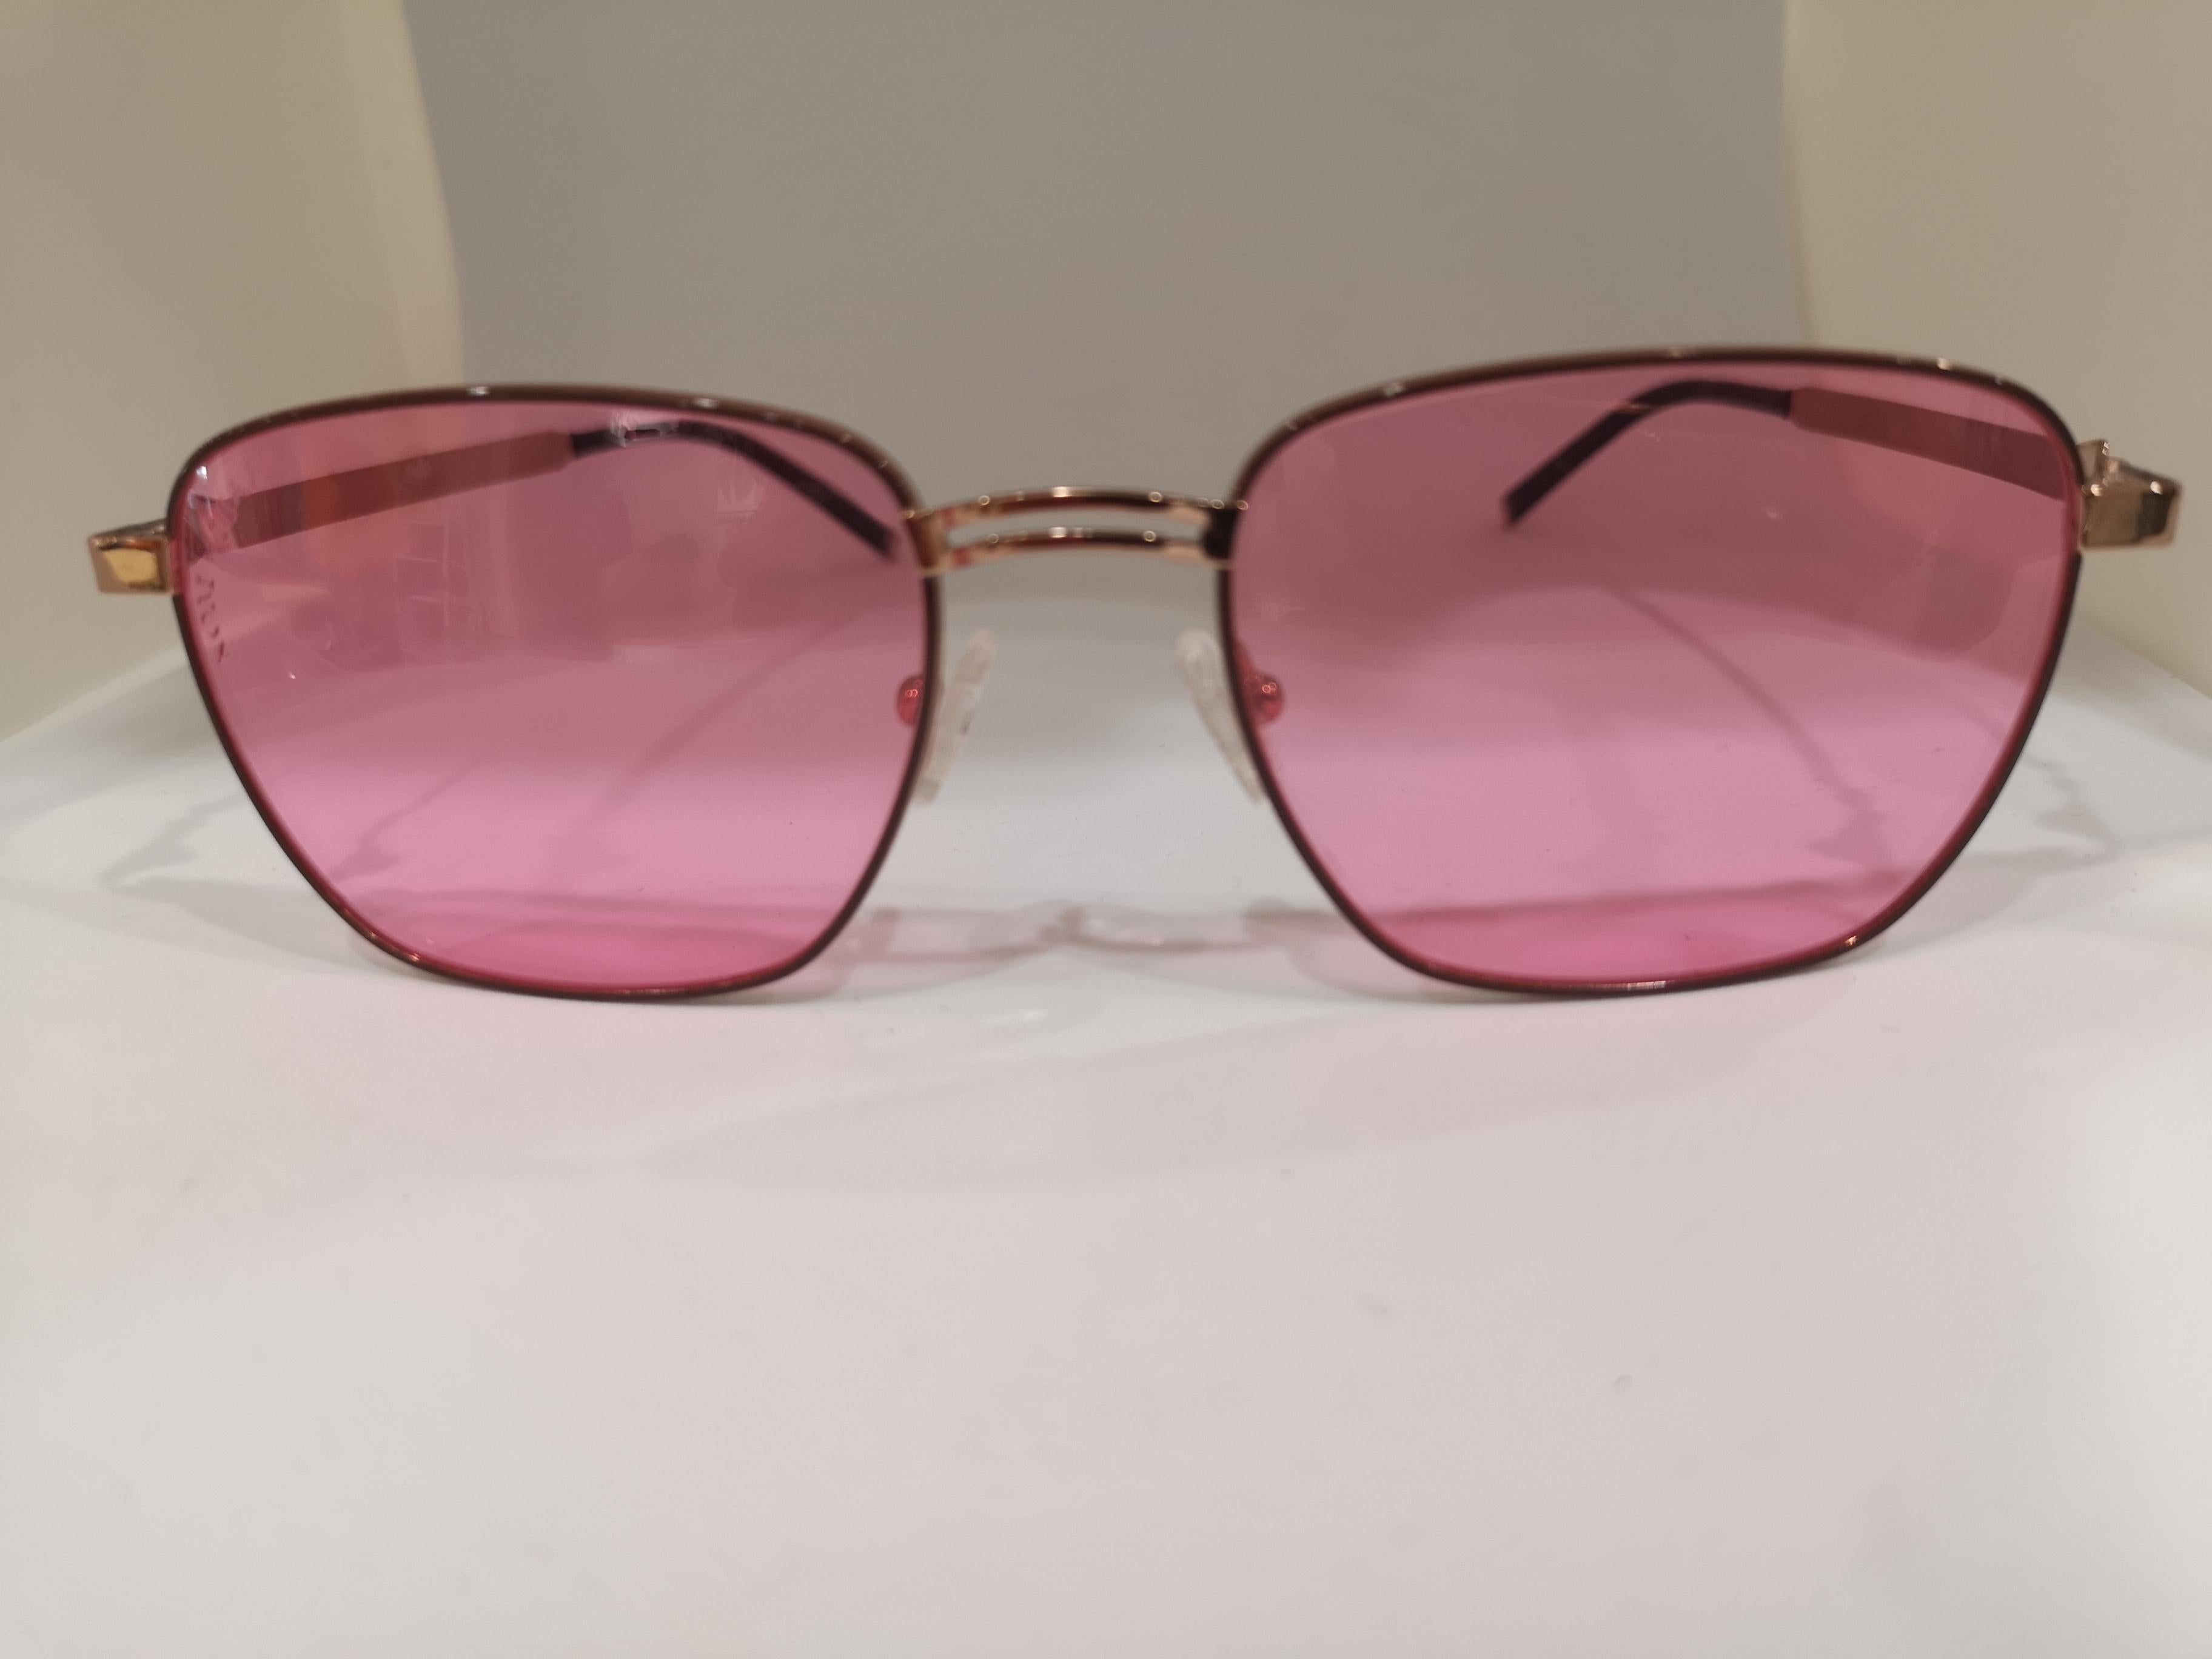 Kommafa pink lens sunglasses
totally handmade in italy 
unique piece